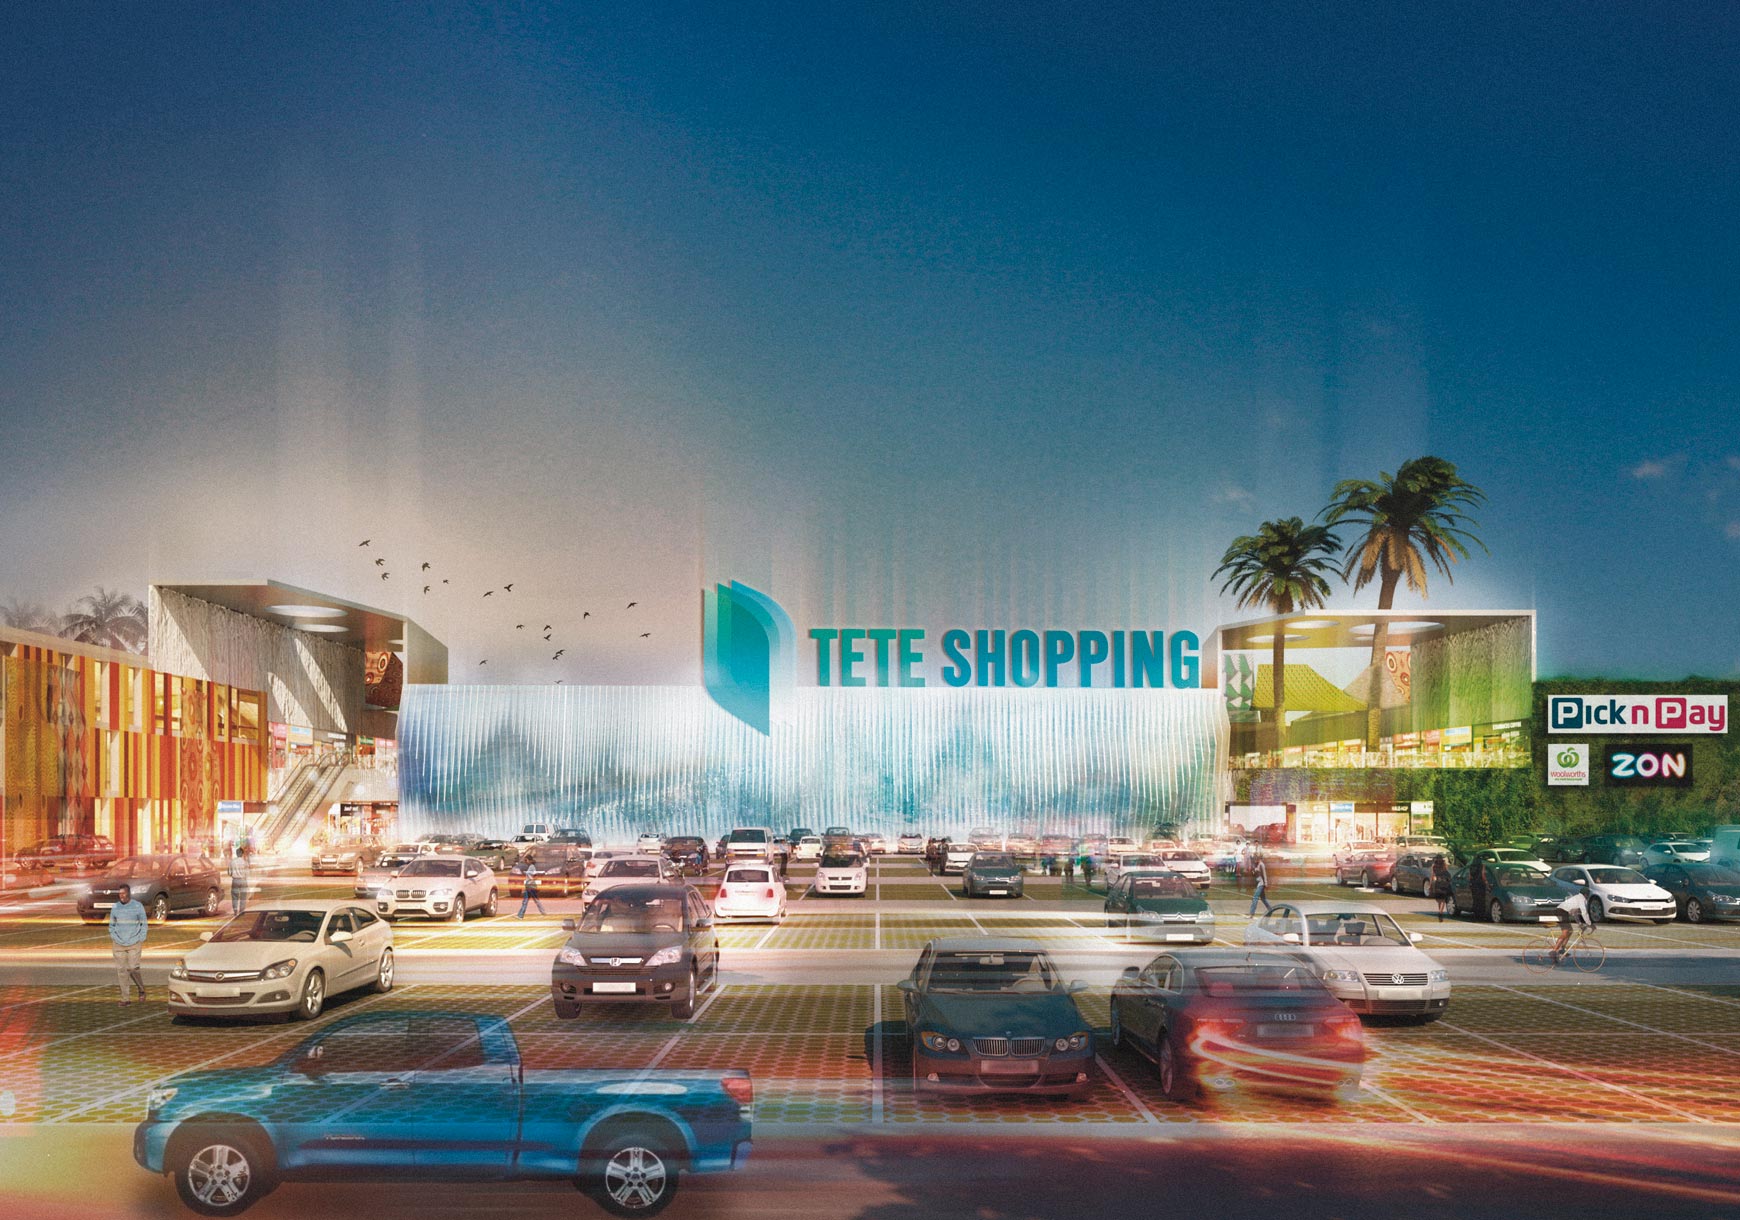 Tete Shopping